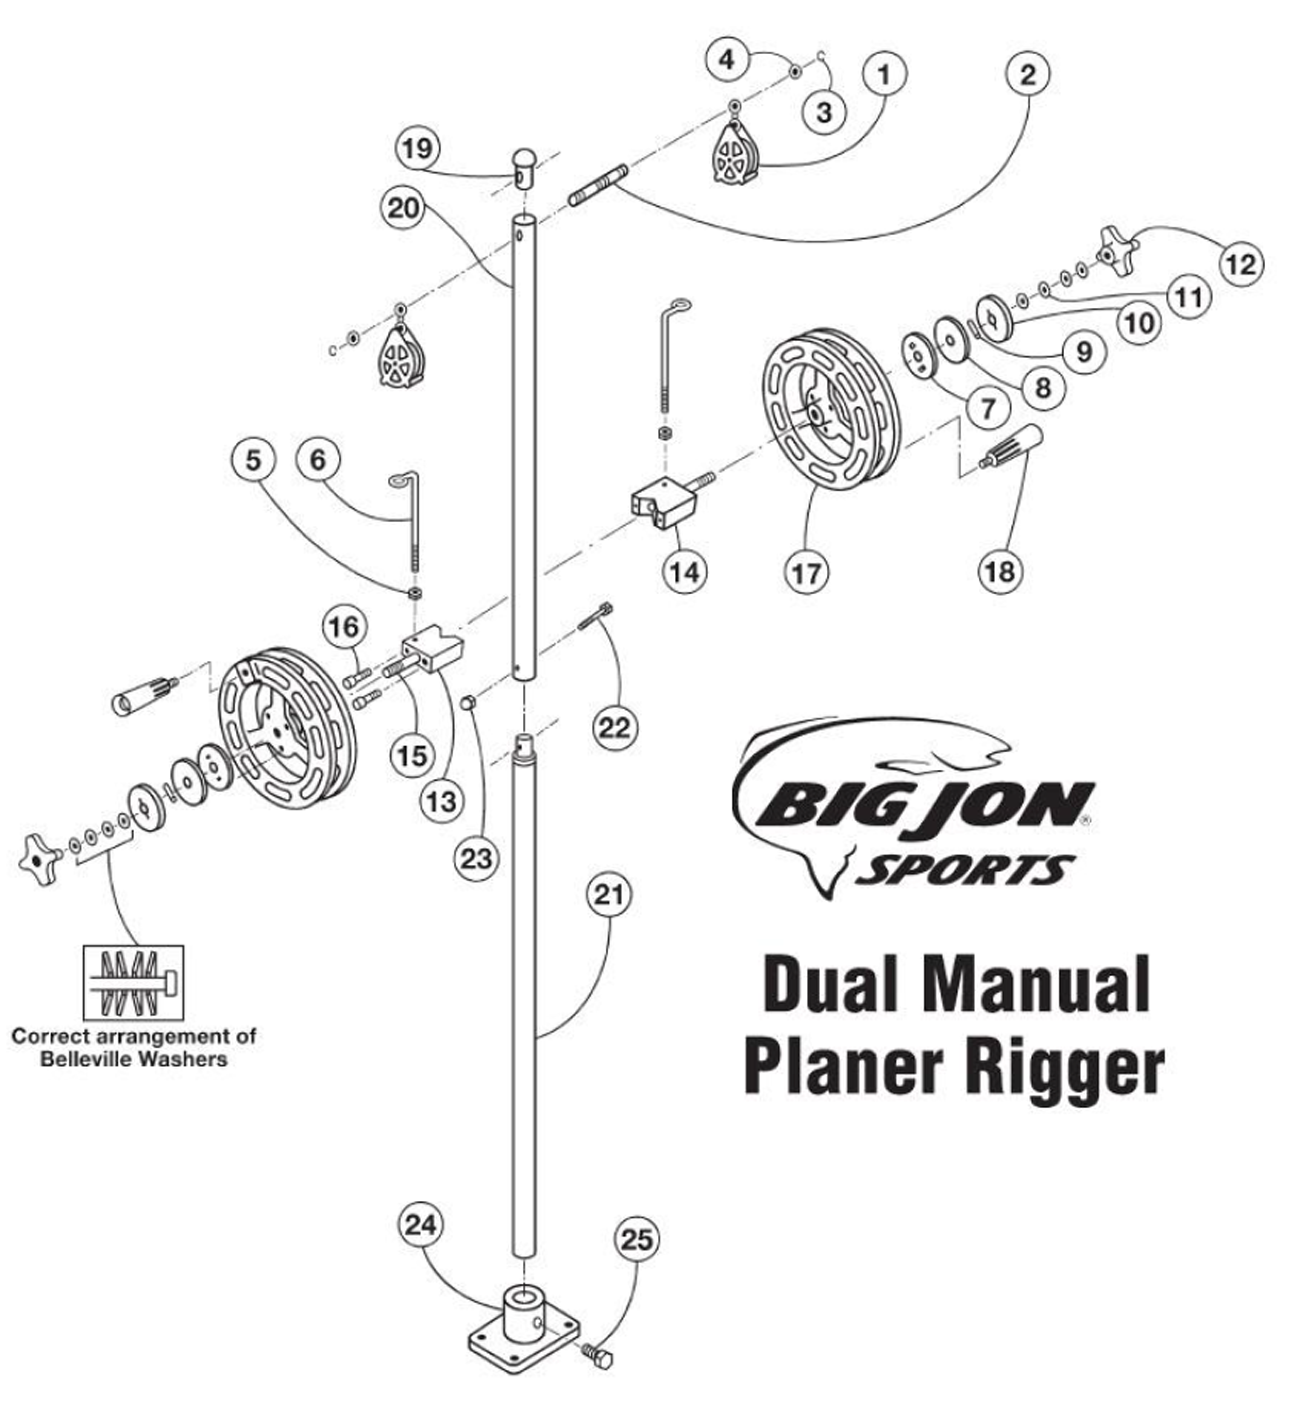 Order Big Jon Dual Manual Planer Rigger parts online from